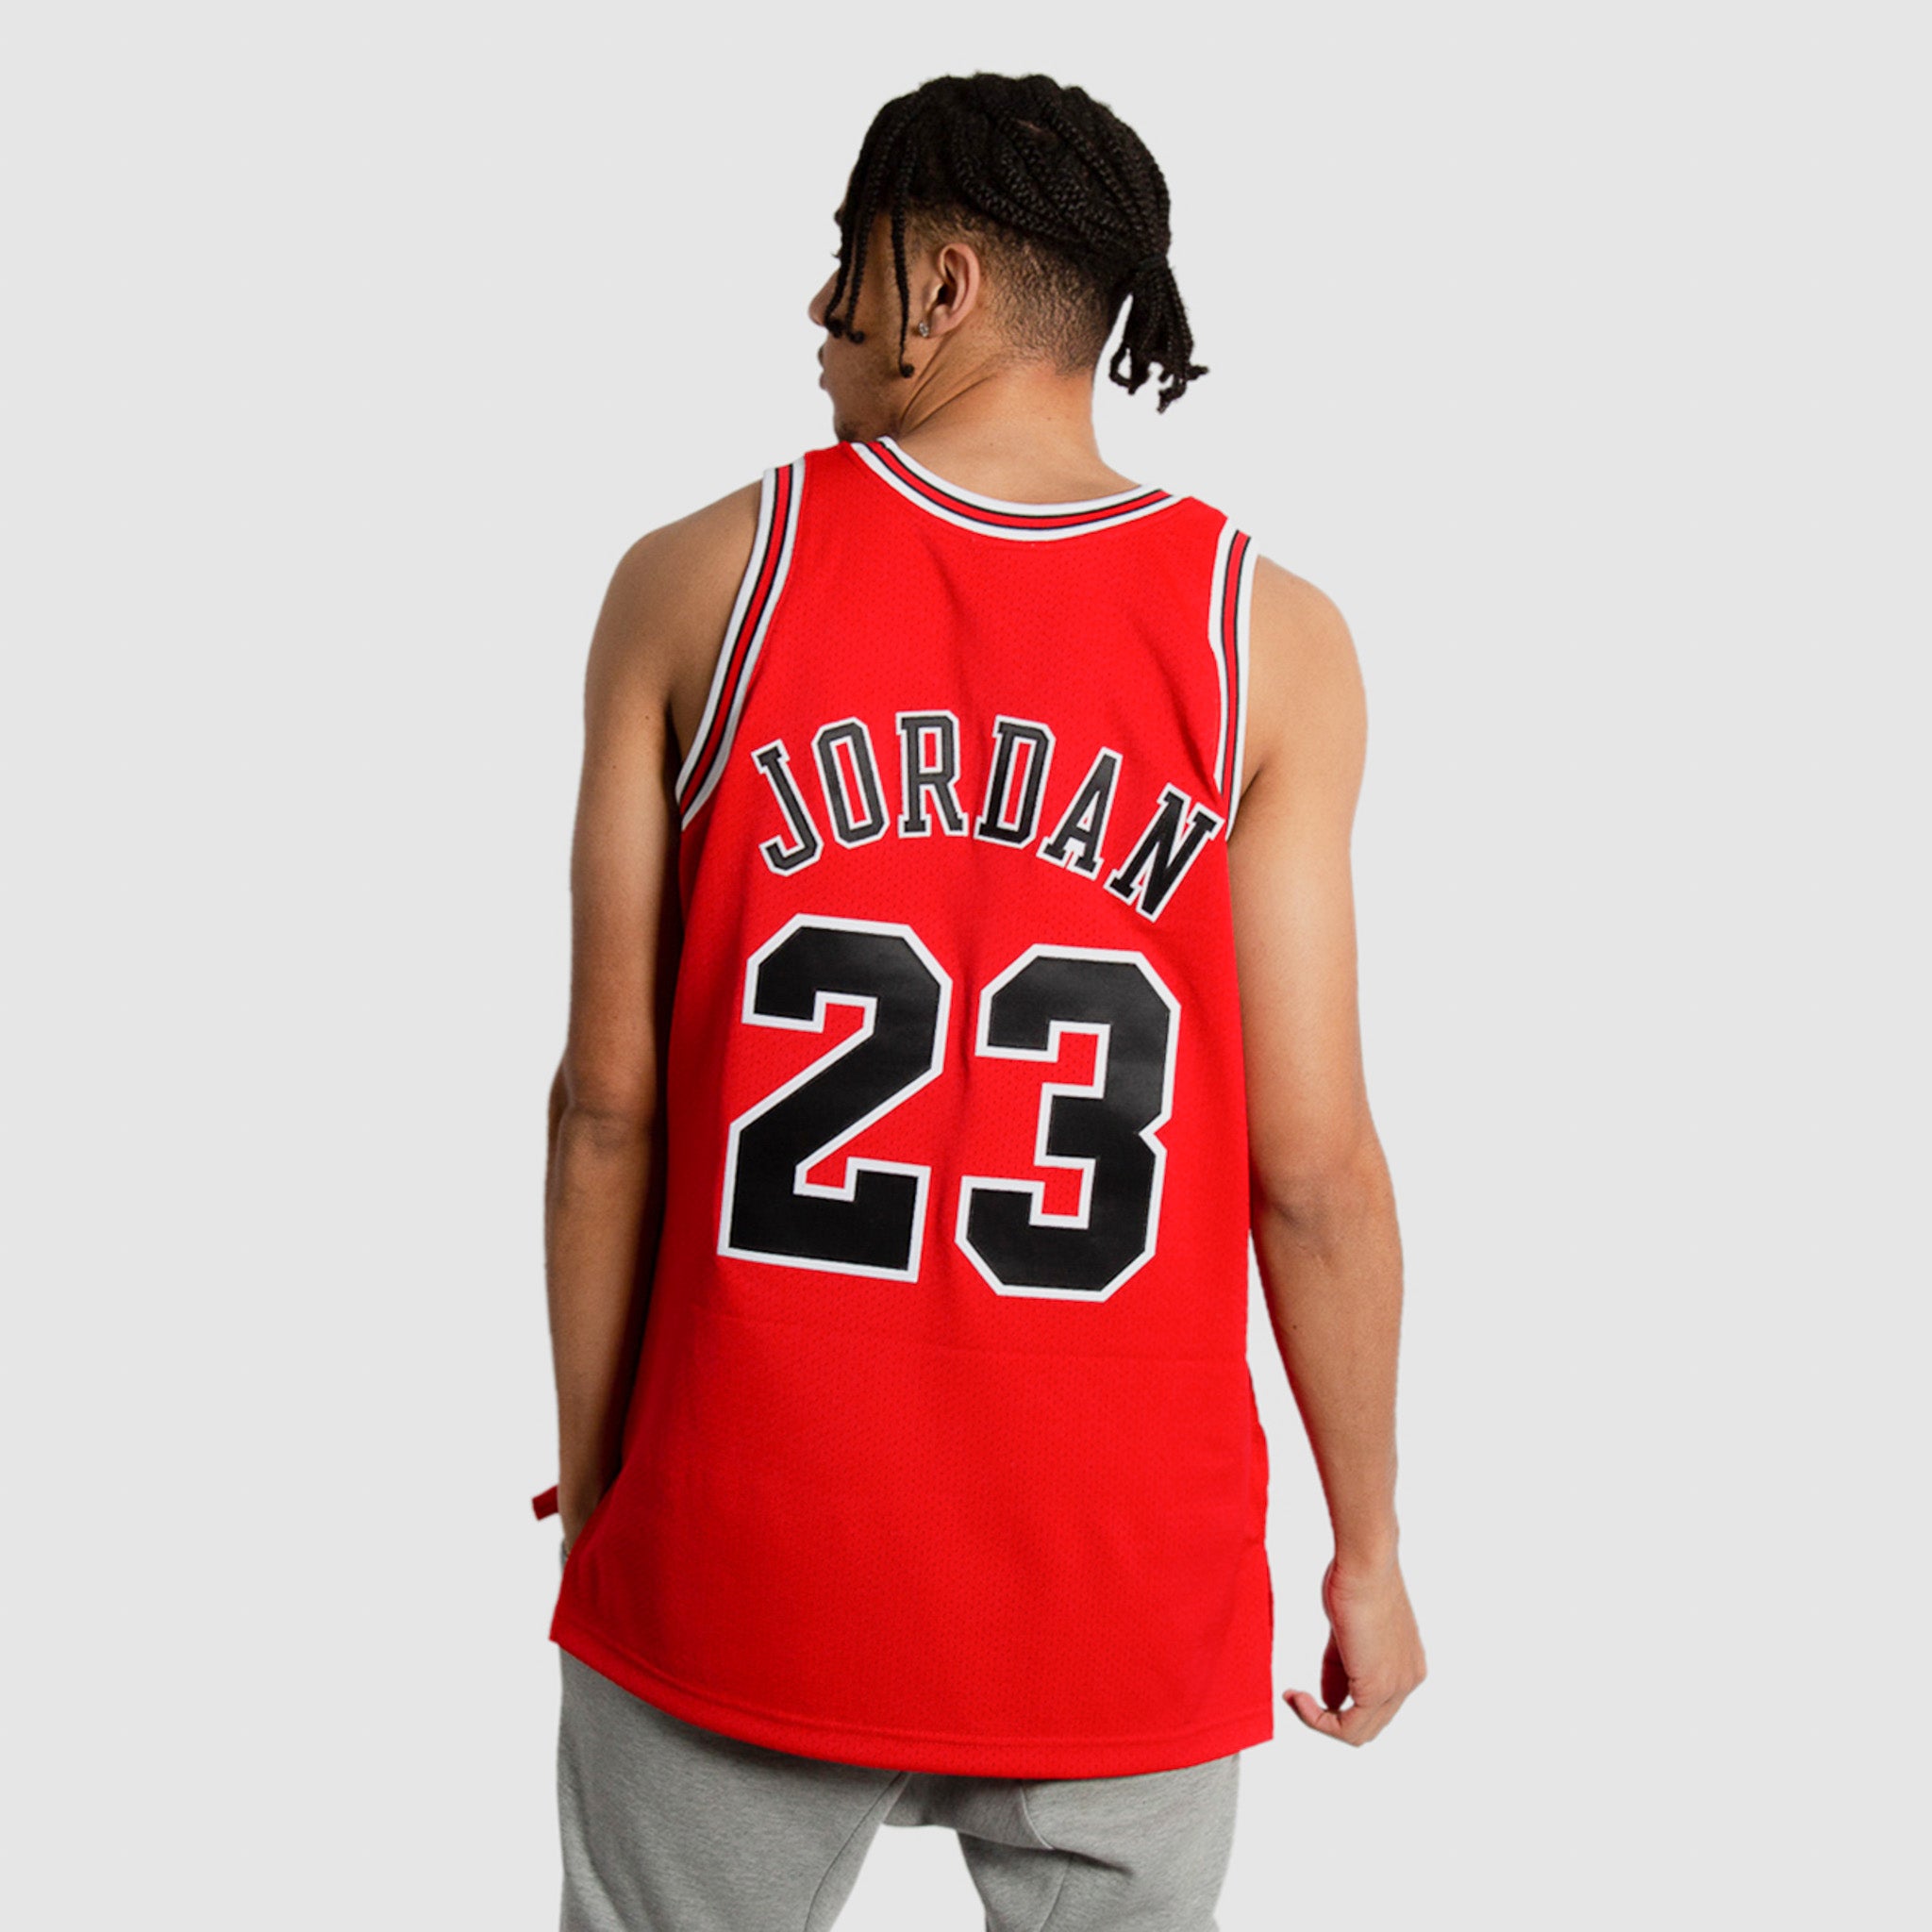 Michael Jordan Chicago Bulls Authentic NBA Champion Basketball 